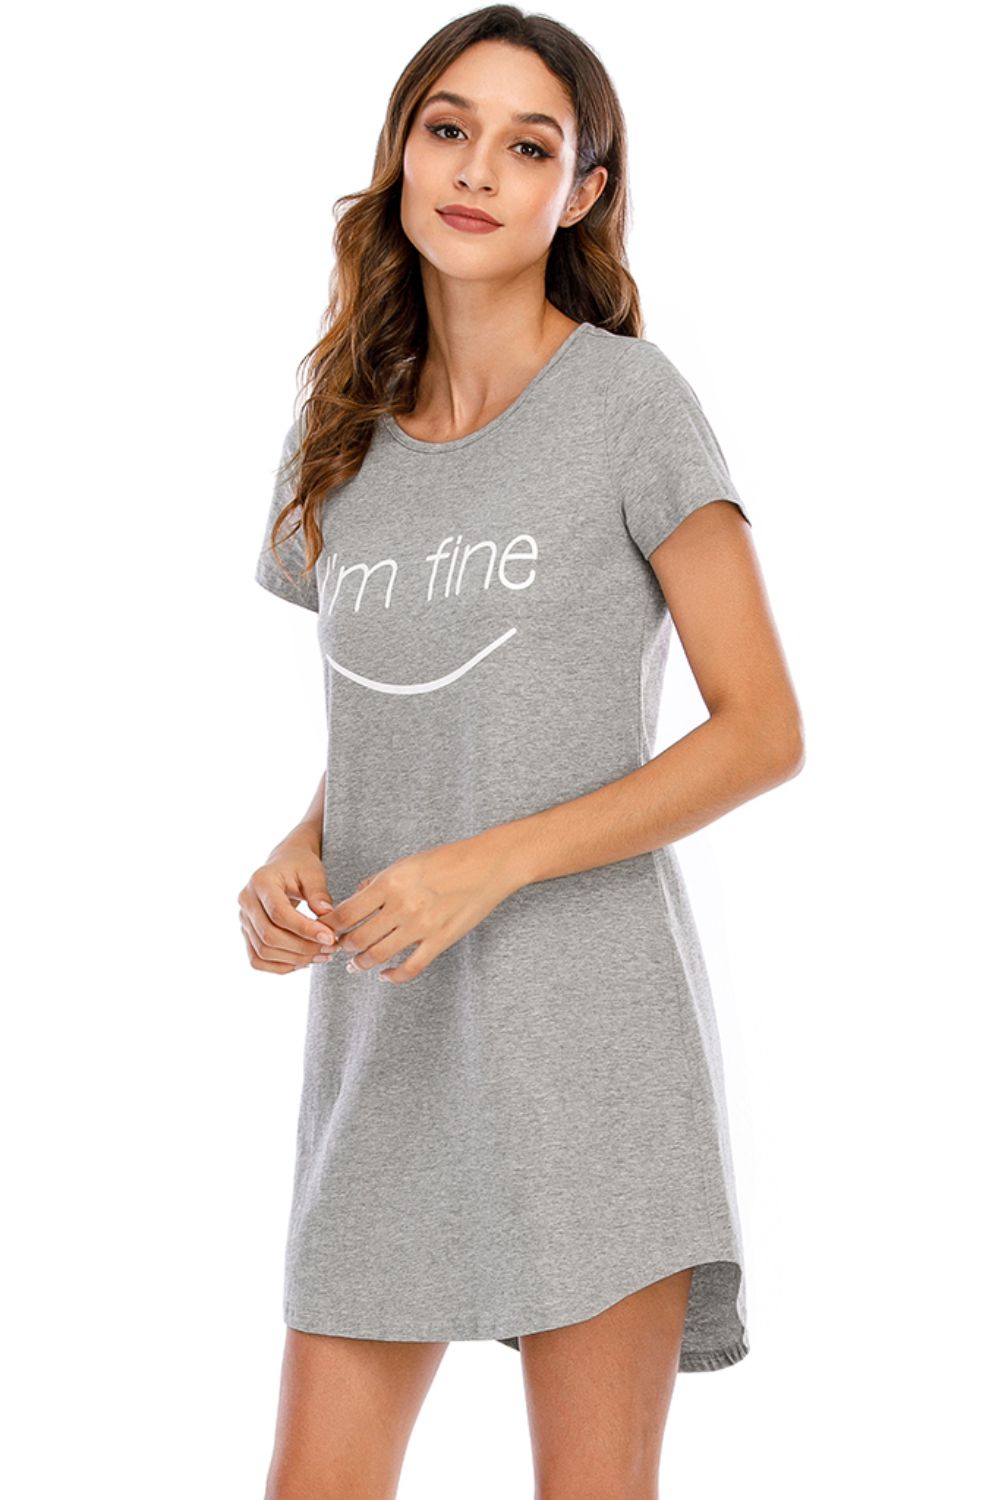 “I’m Fine” Short Sleeve Lounge Dress